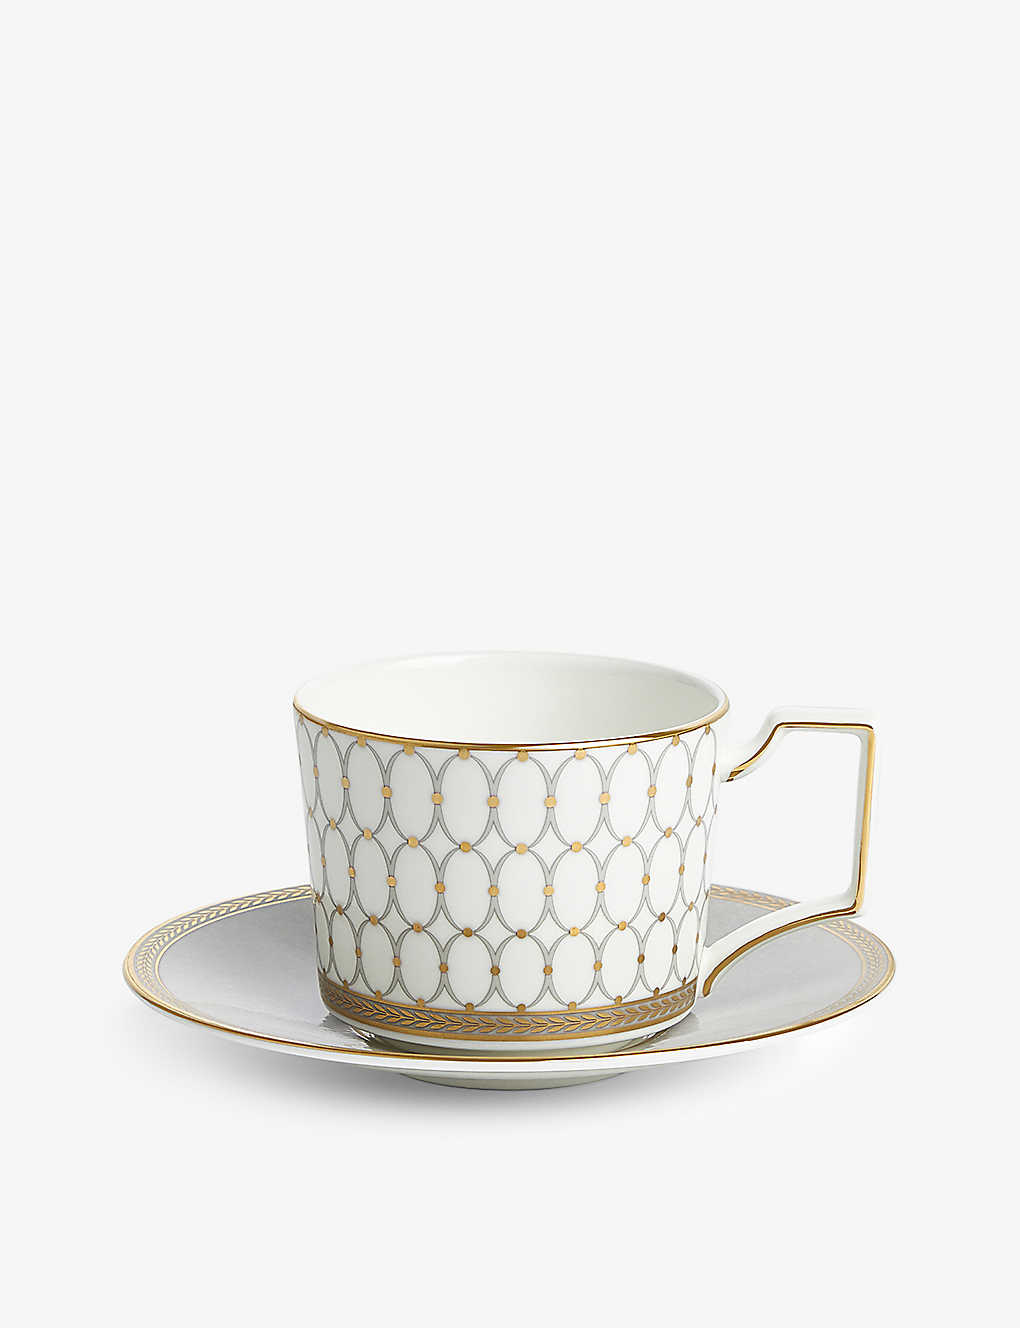 WEDGWOOD ルネサンスゴールド ボーンチャイナ ティーカップソーサー 2個セット Renaissance Gold bone china teacup and saucer set of two